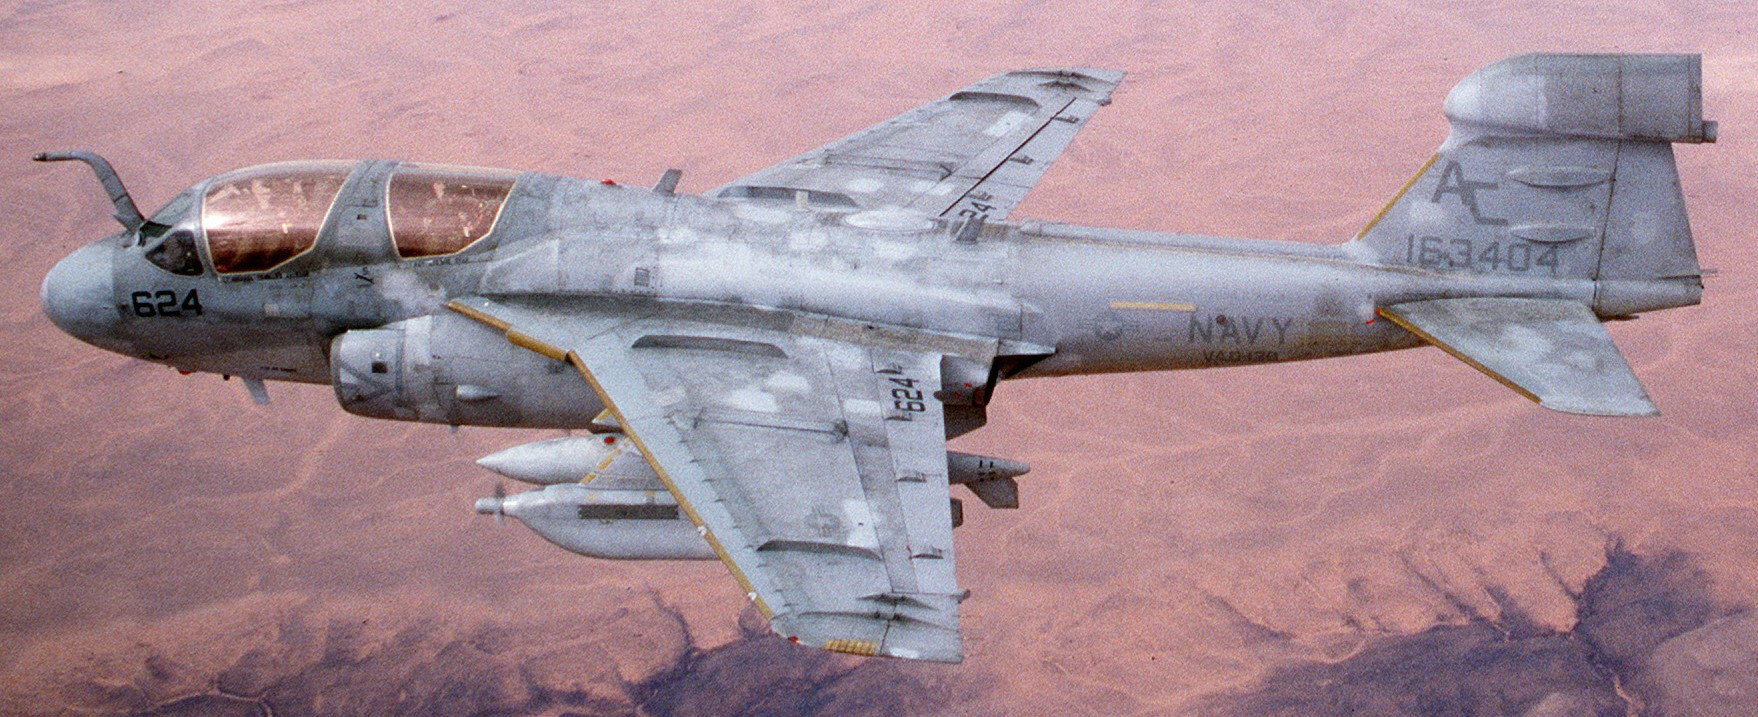 vaq-130 zappers tactical electronic warfare squadron tacelron us navy grumman ea-6b prowler aircraft carrier air wing cvw-3 uss john f. kennedy cv-67 68a